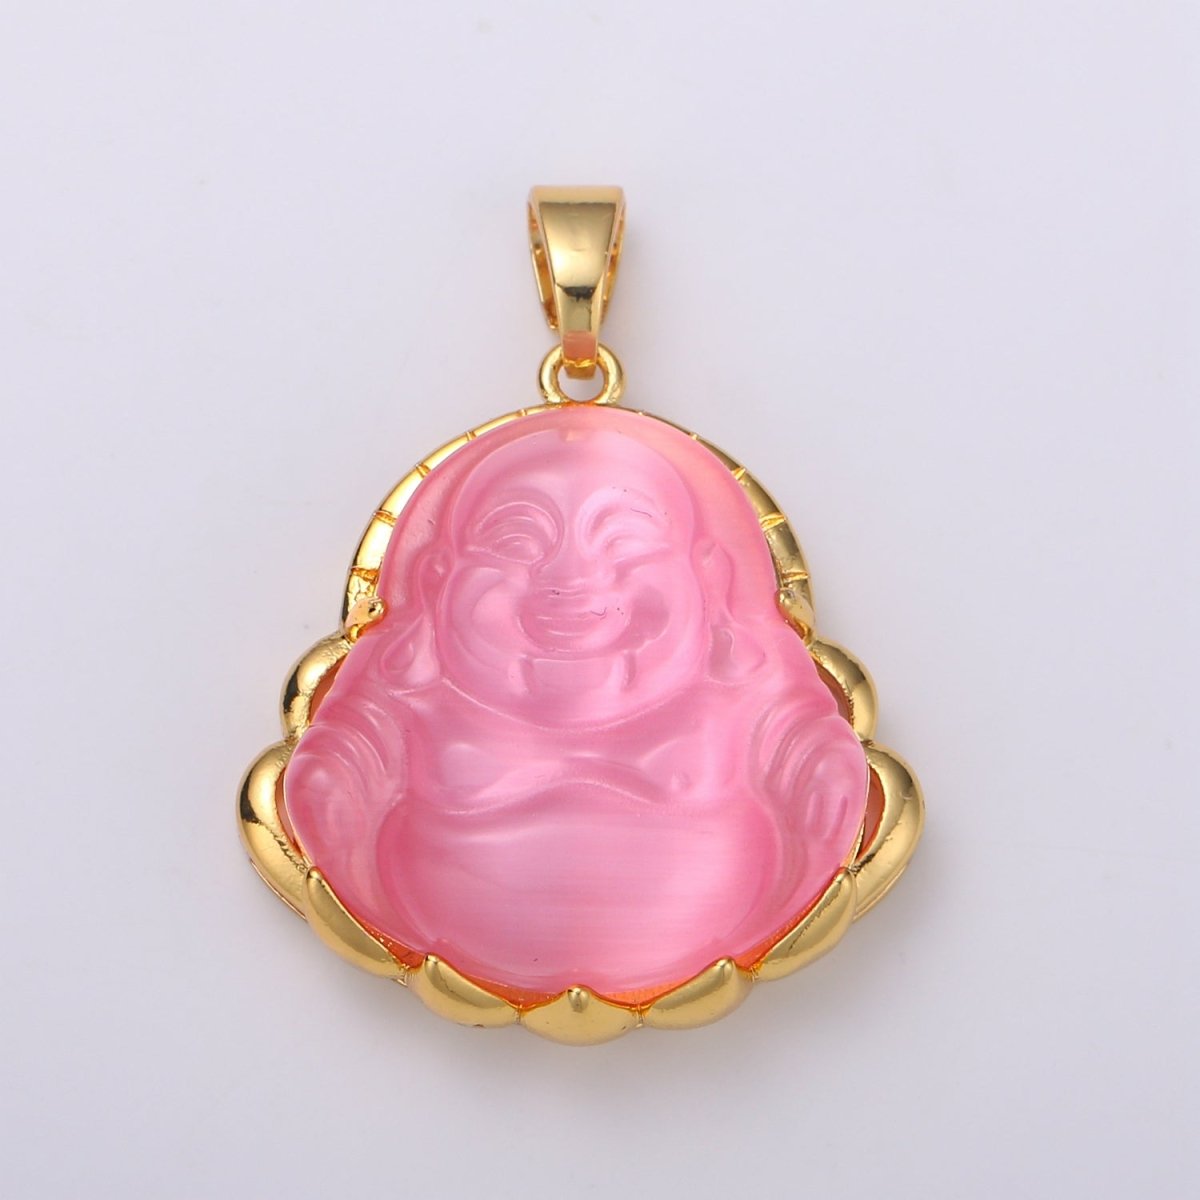 Dainty Gold Filled Buddha Pendant for Necklace Laughing Buddha Charm Tiger eye Buddha Pendant - DLUXCA